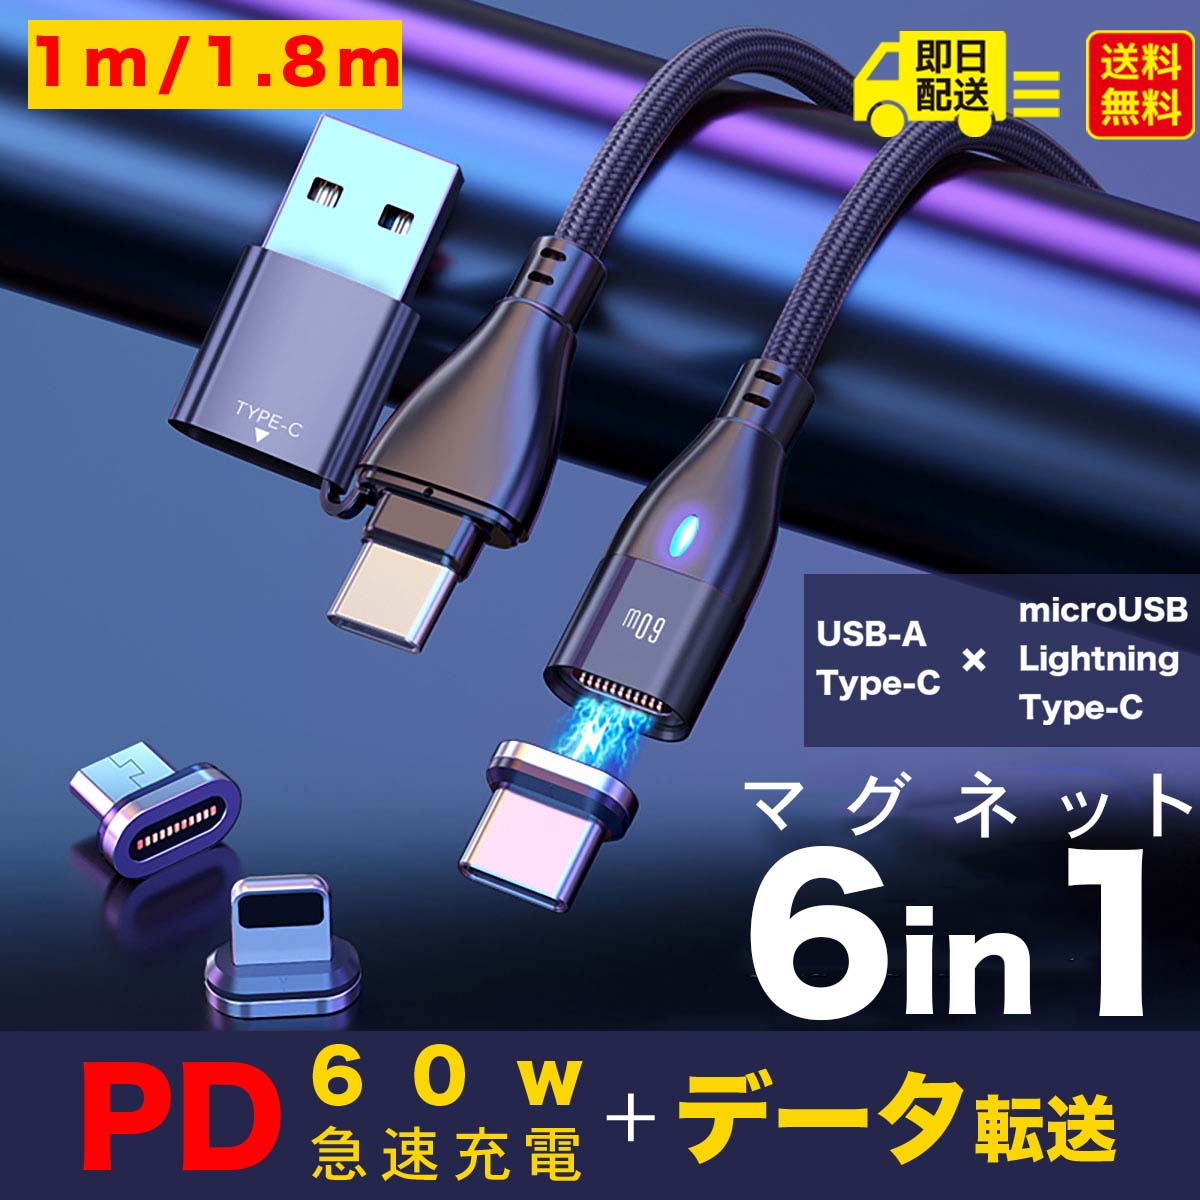 moshi USB-C Multimedia Adapter (Titanium Gray)日本正規代理店品